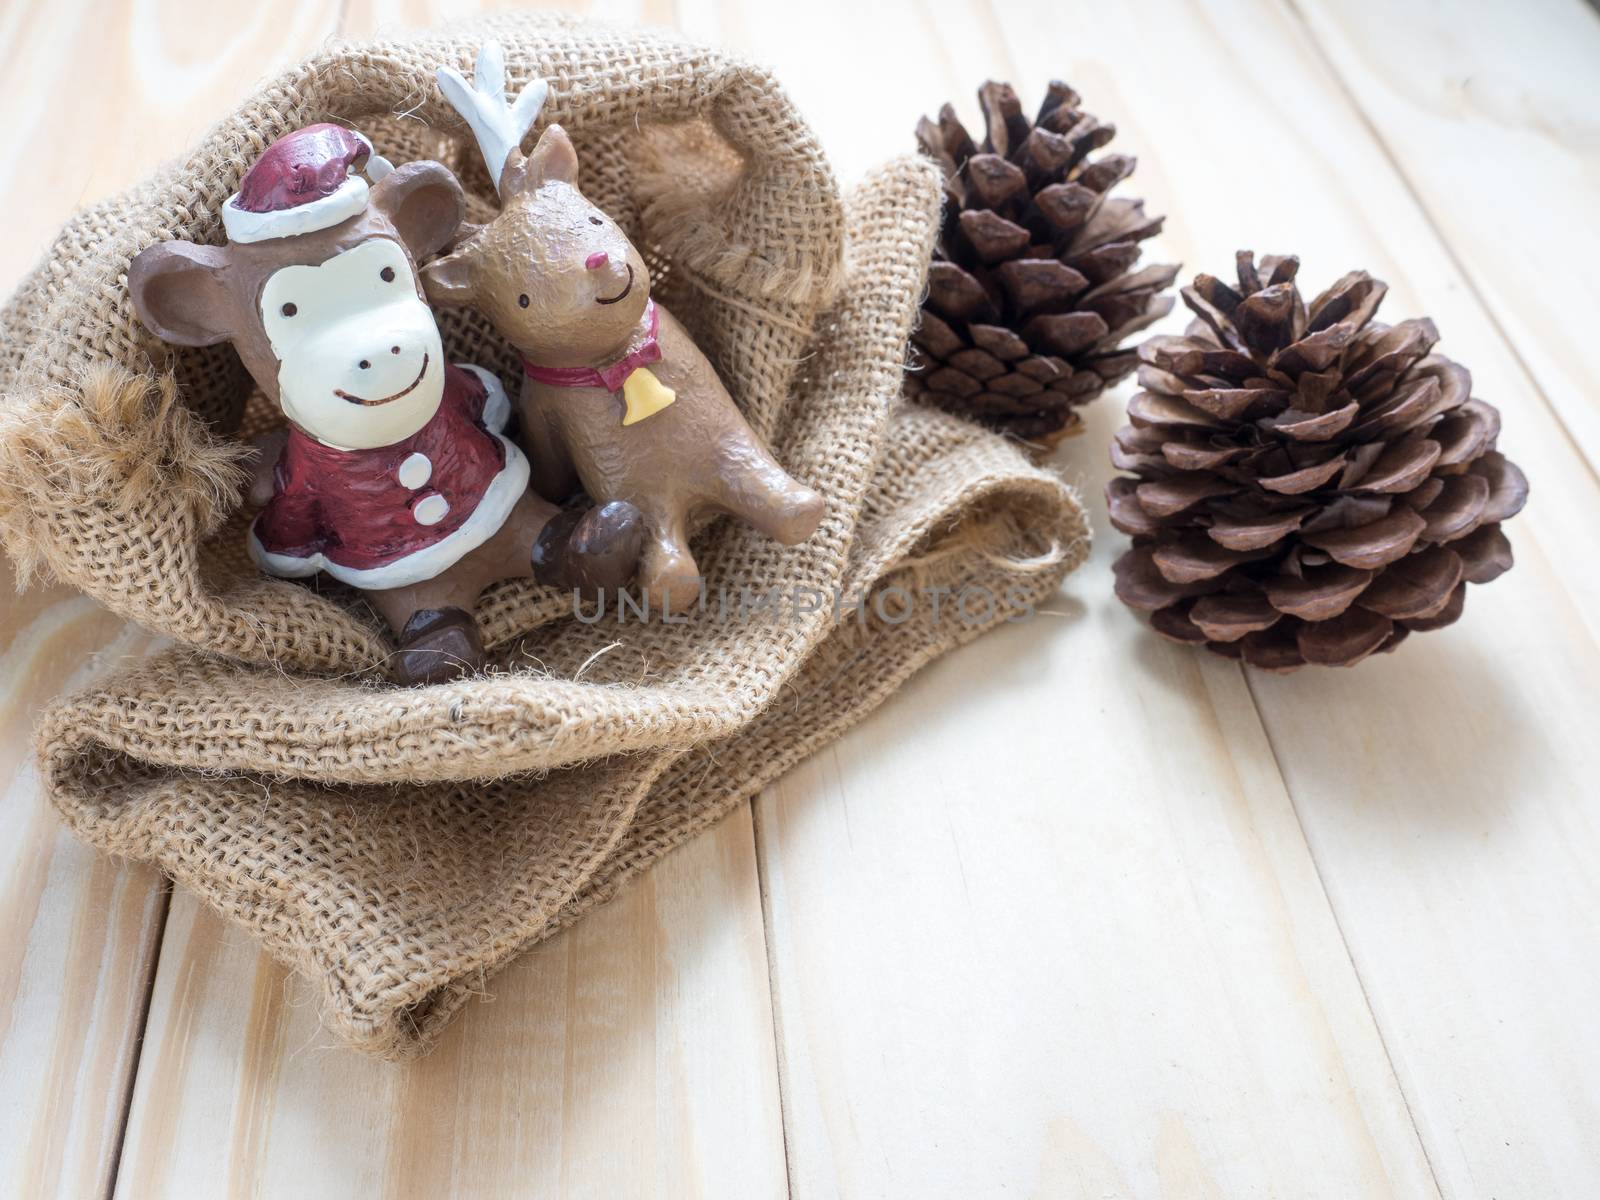 monkey Santa  & Reindeer , decoration merry christmas & happy new year, select focus style